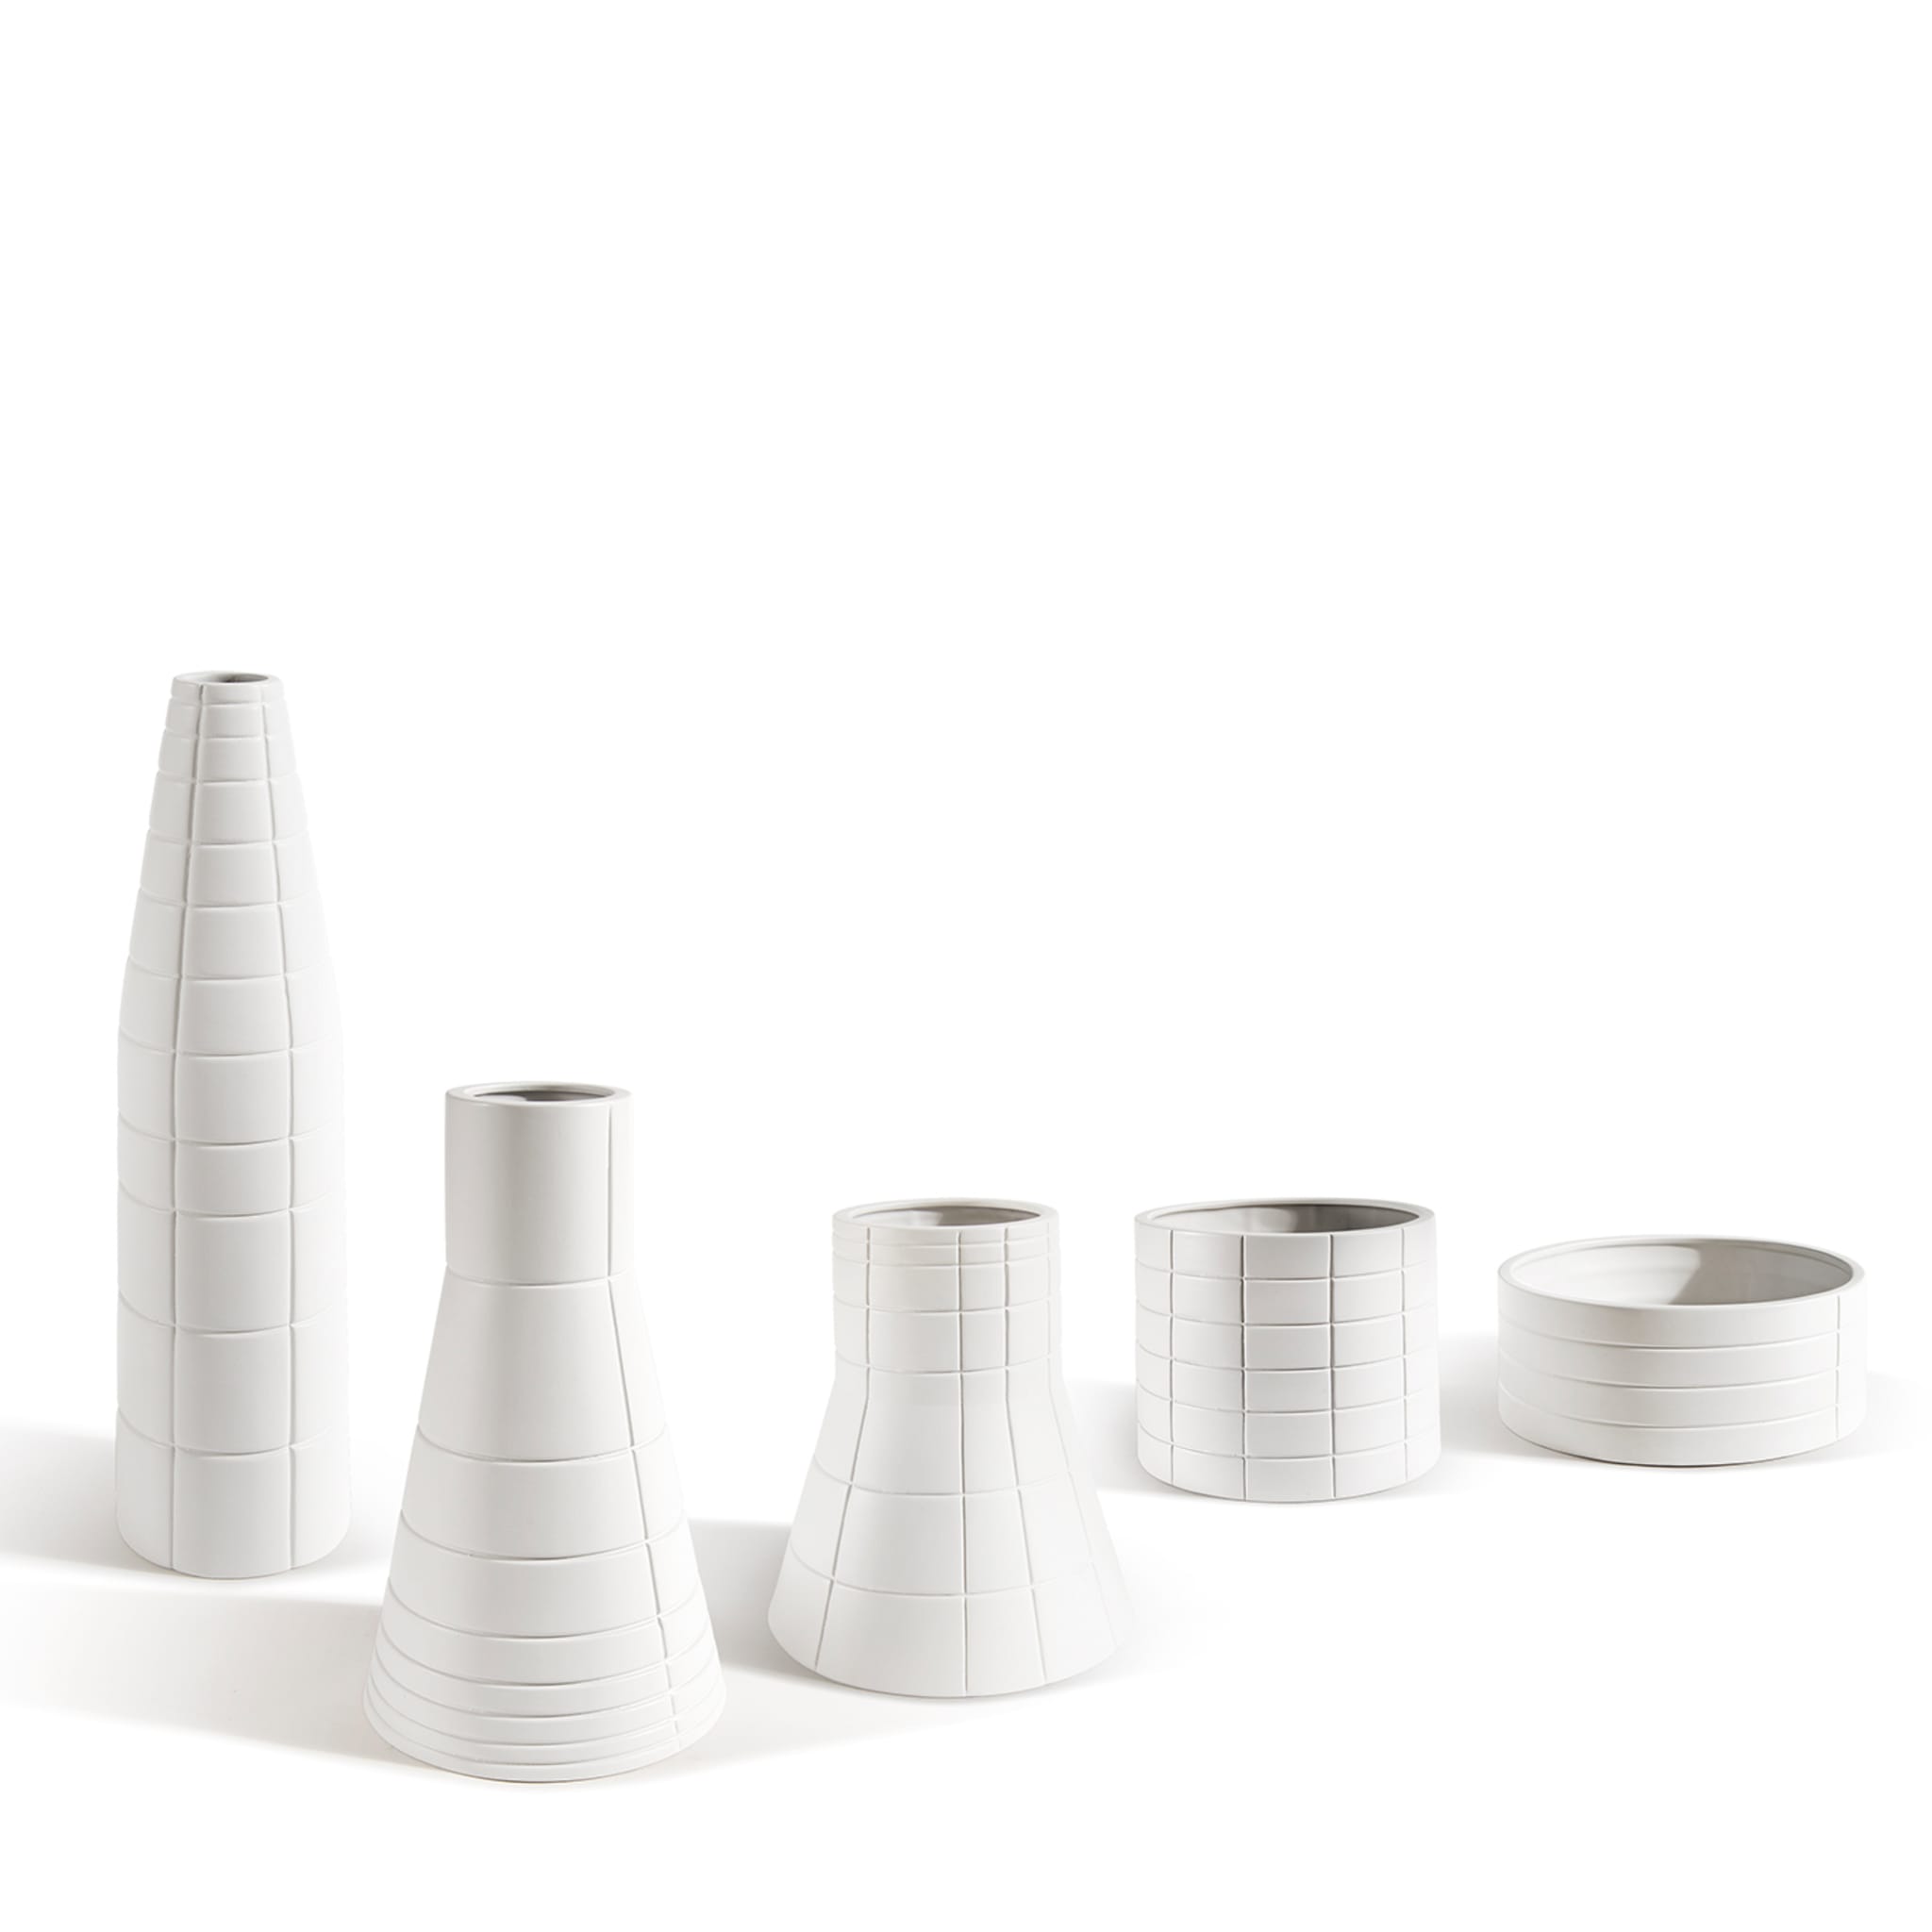 Rikuadra White Ceramic Vase #3 - Alternative view 1